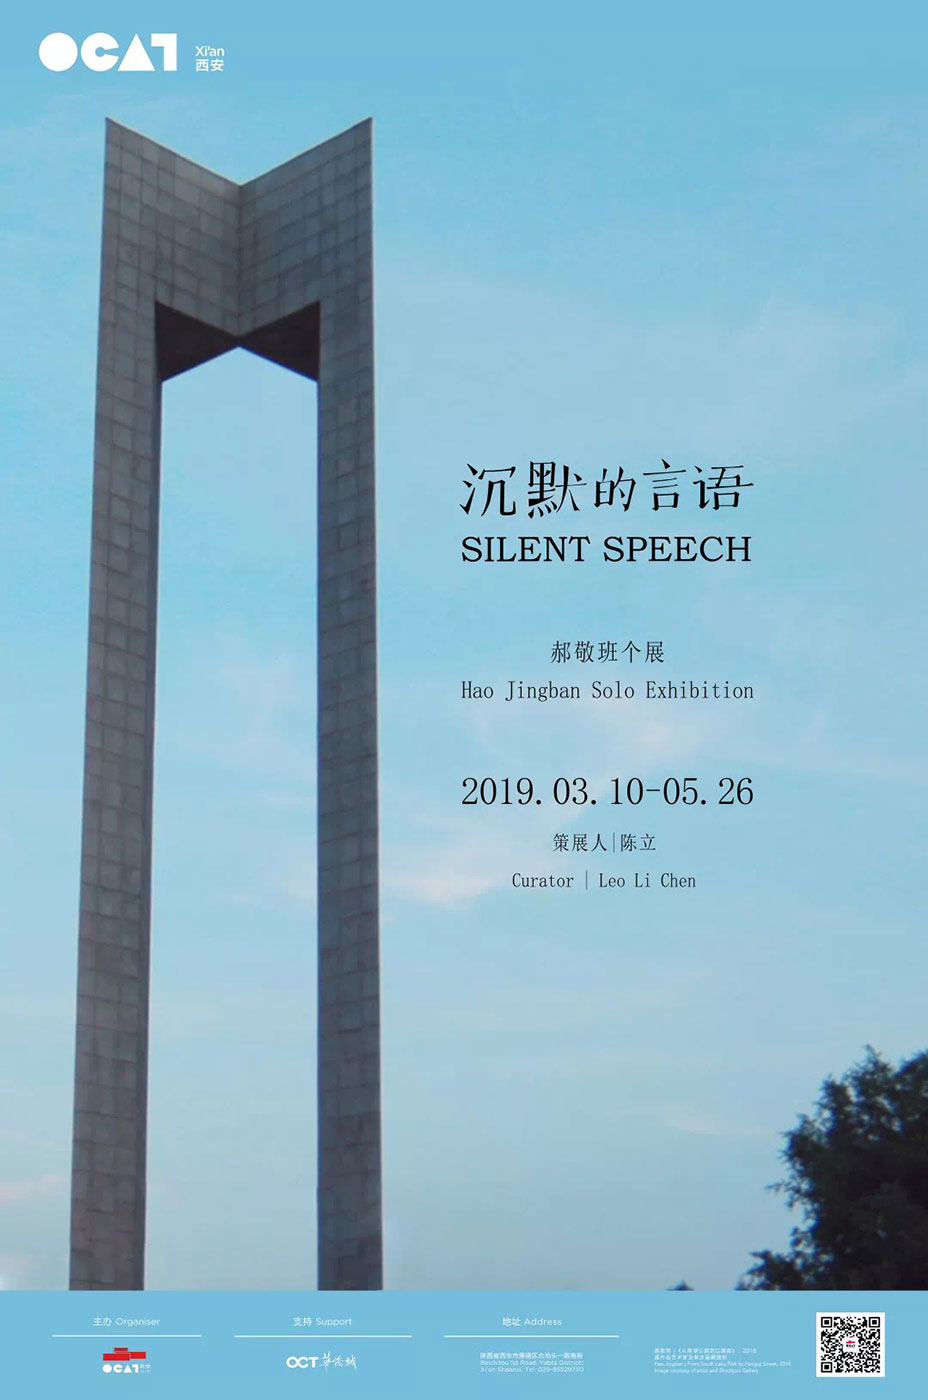 OCAT 西安展出郝展班個展「沉默的言語」